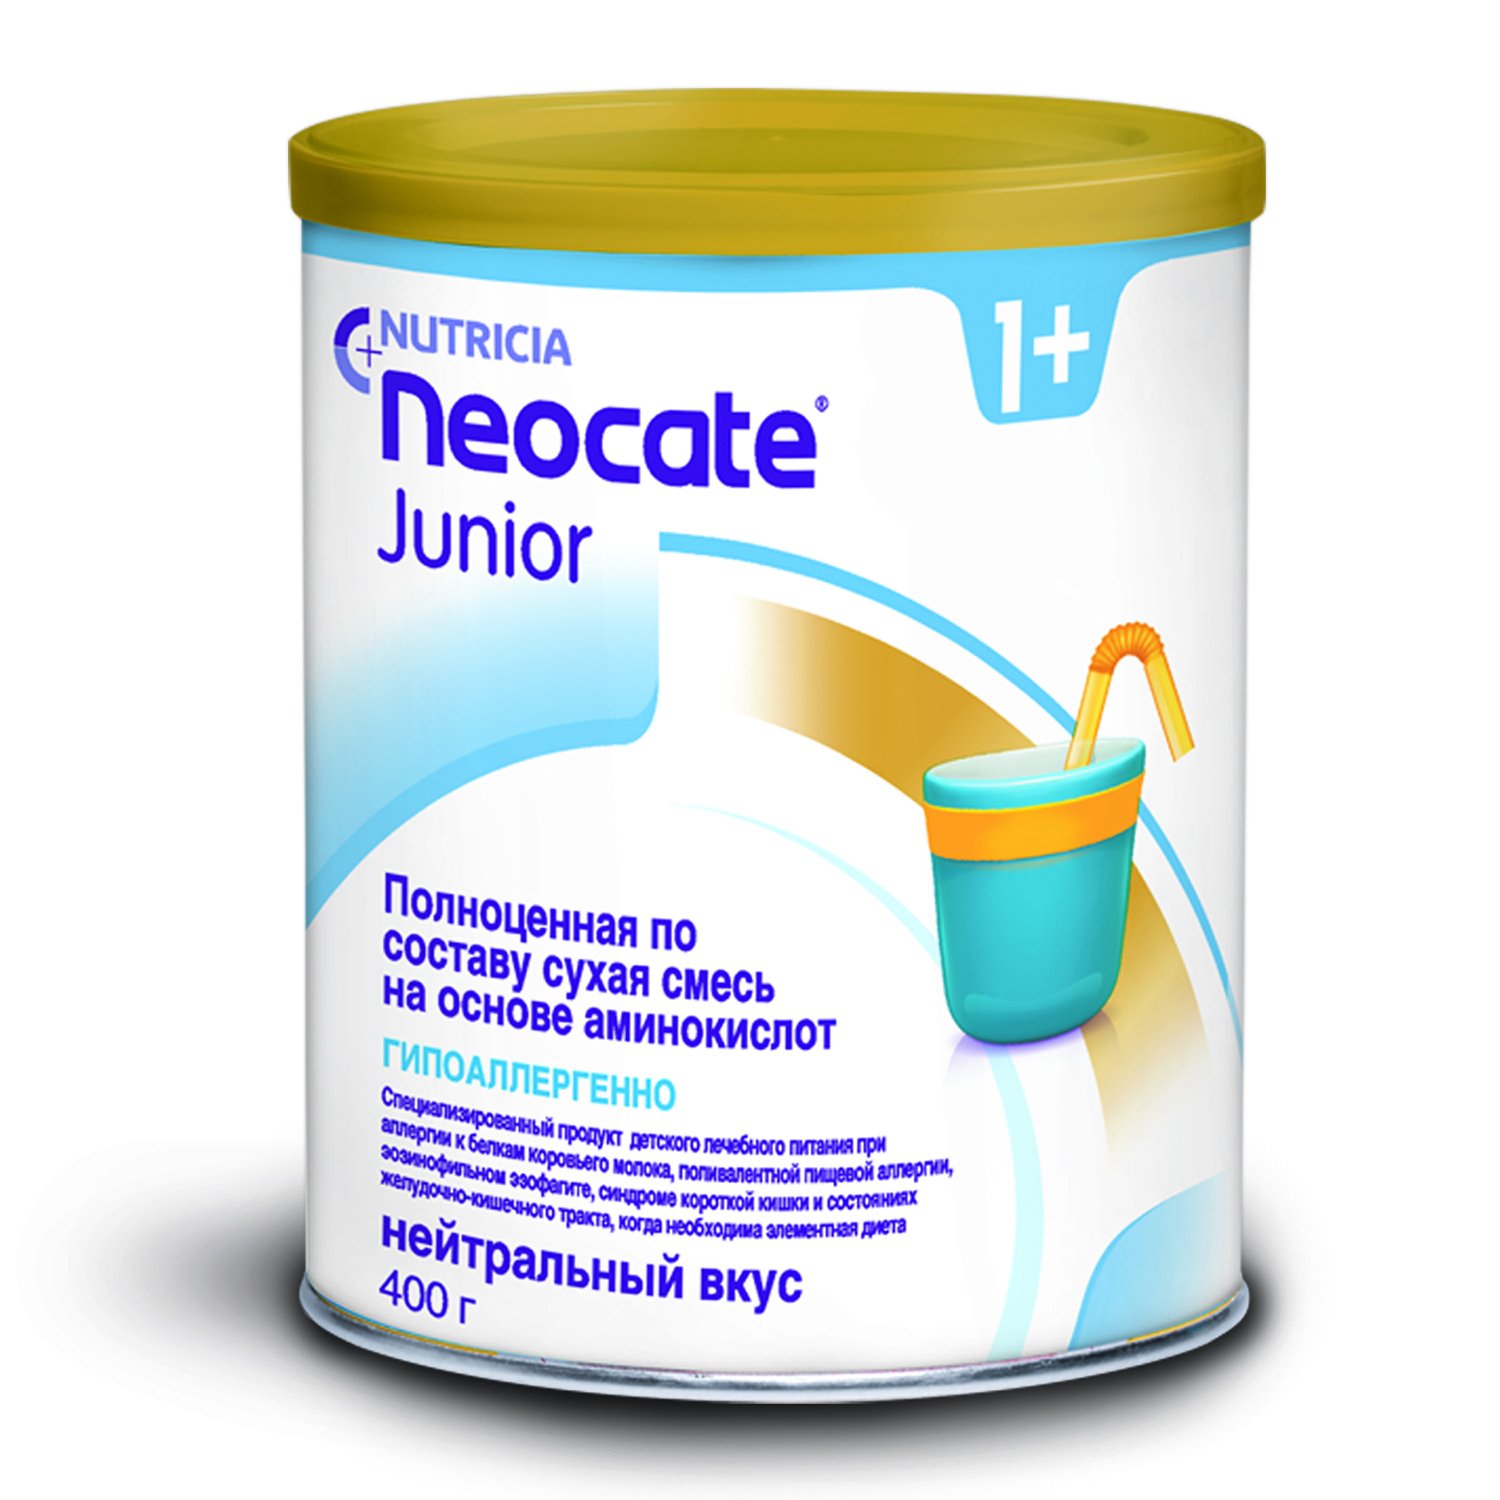 Nutricia NEOCATE Junior сухая смесь на основе аминокислот (от 1 года до 10 лет ) 400 гр 652710 